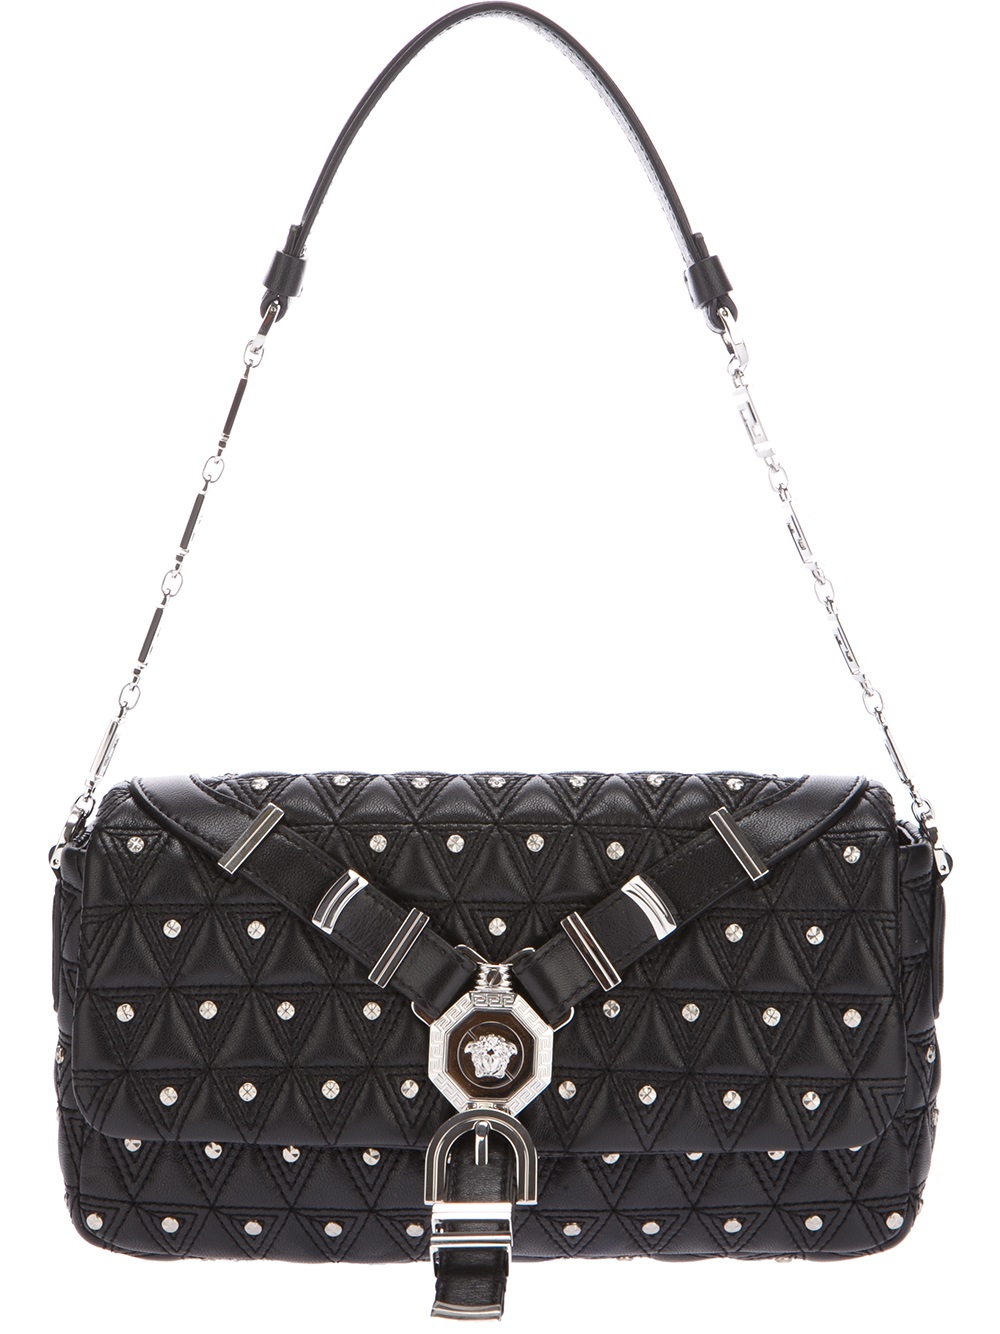 Versace Chain Strap Bag in Black | Lyst